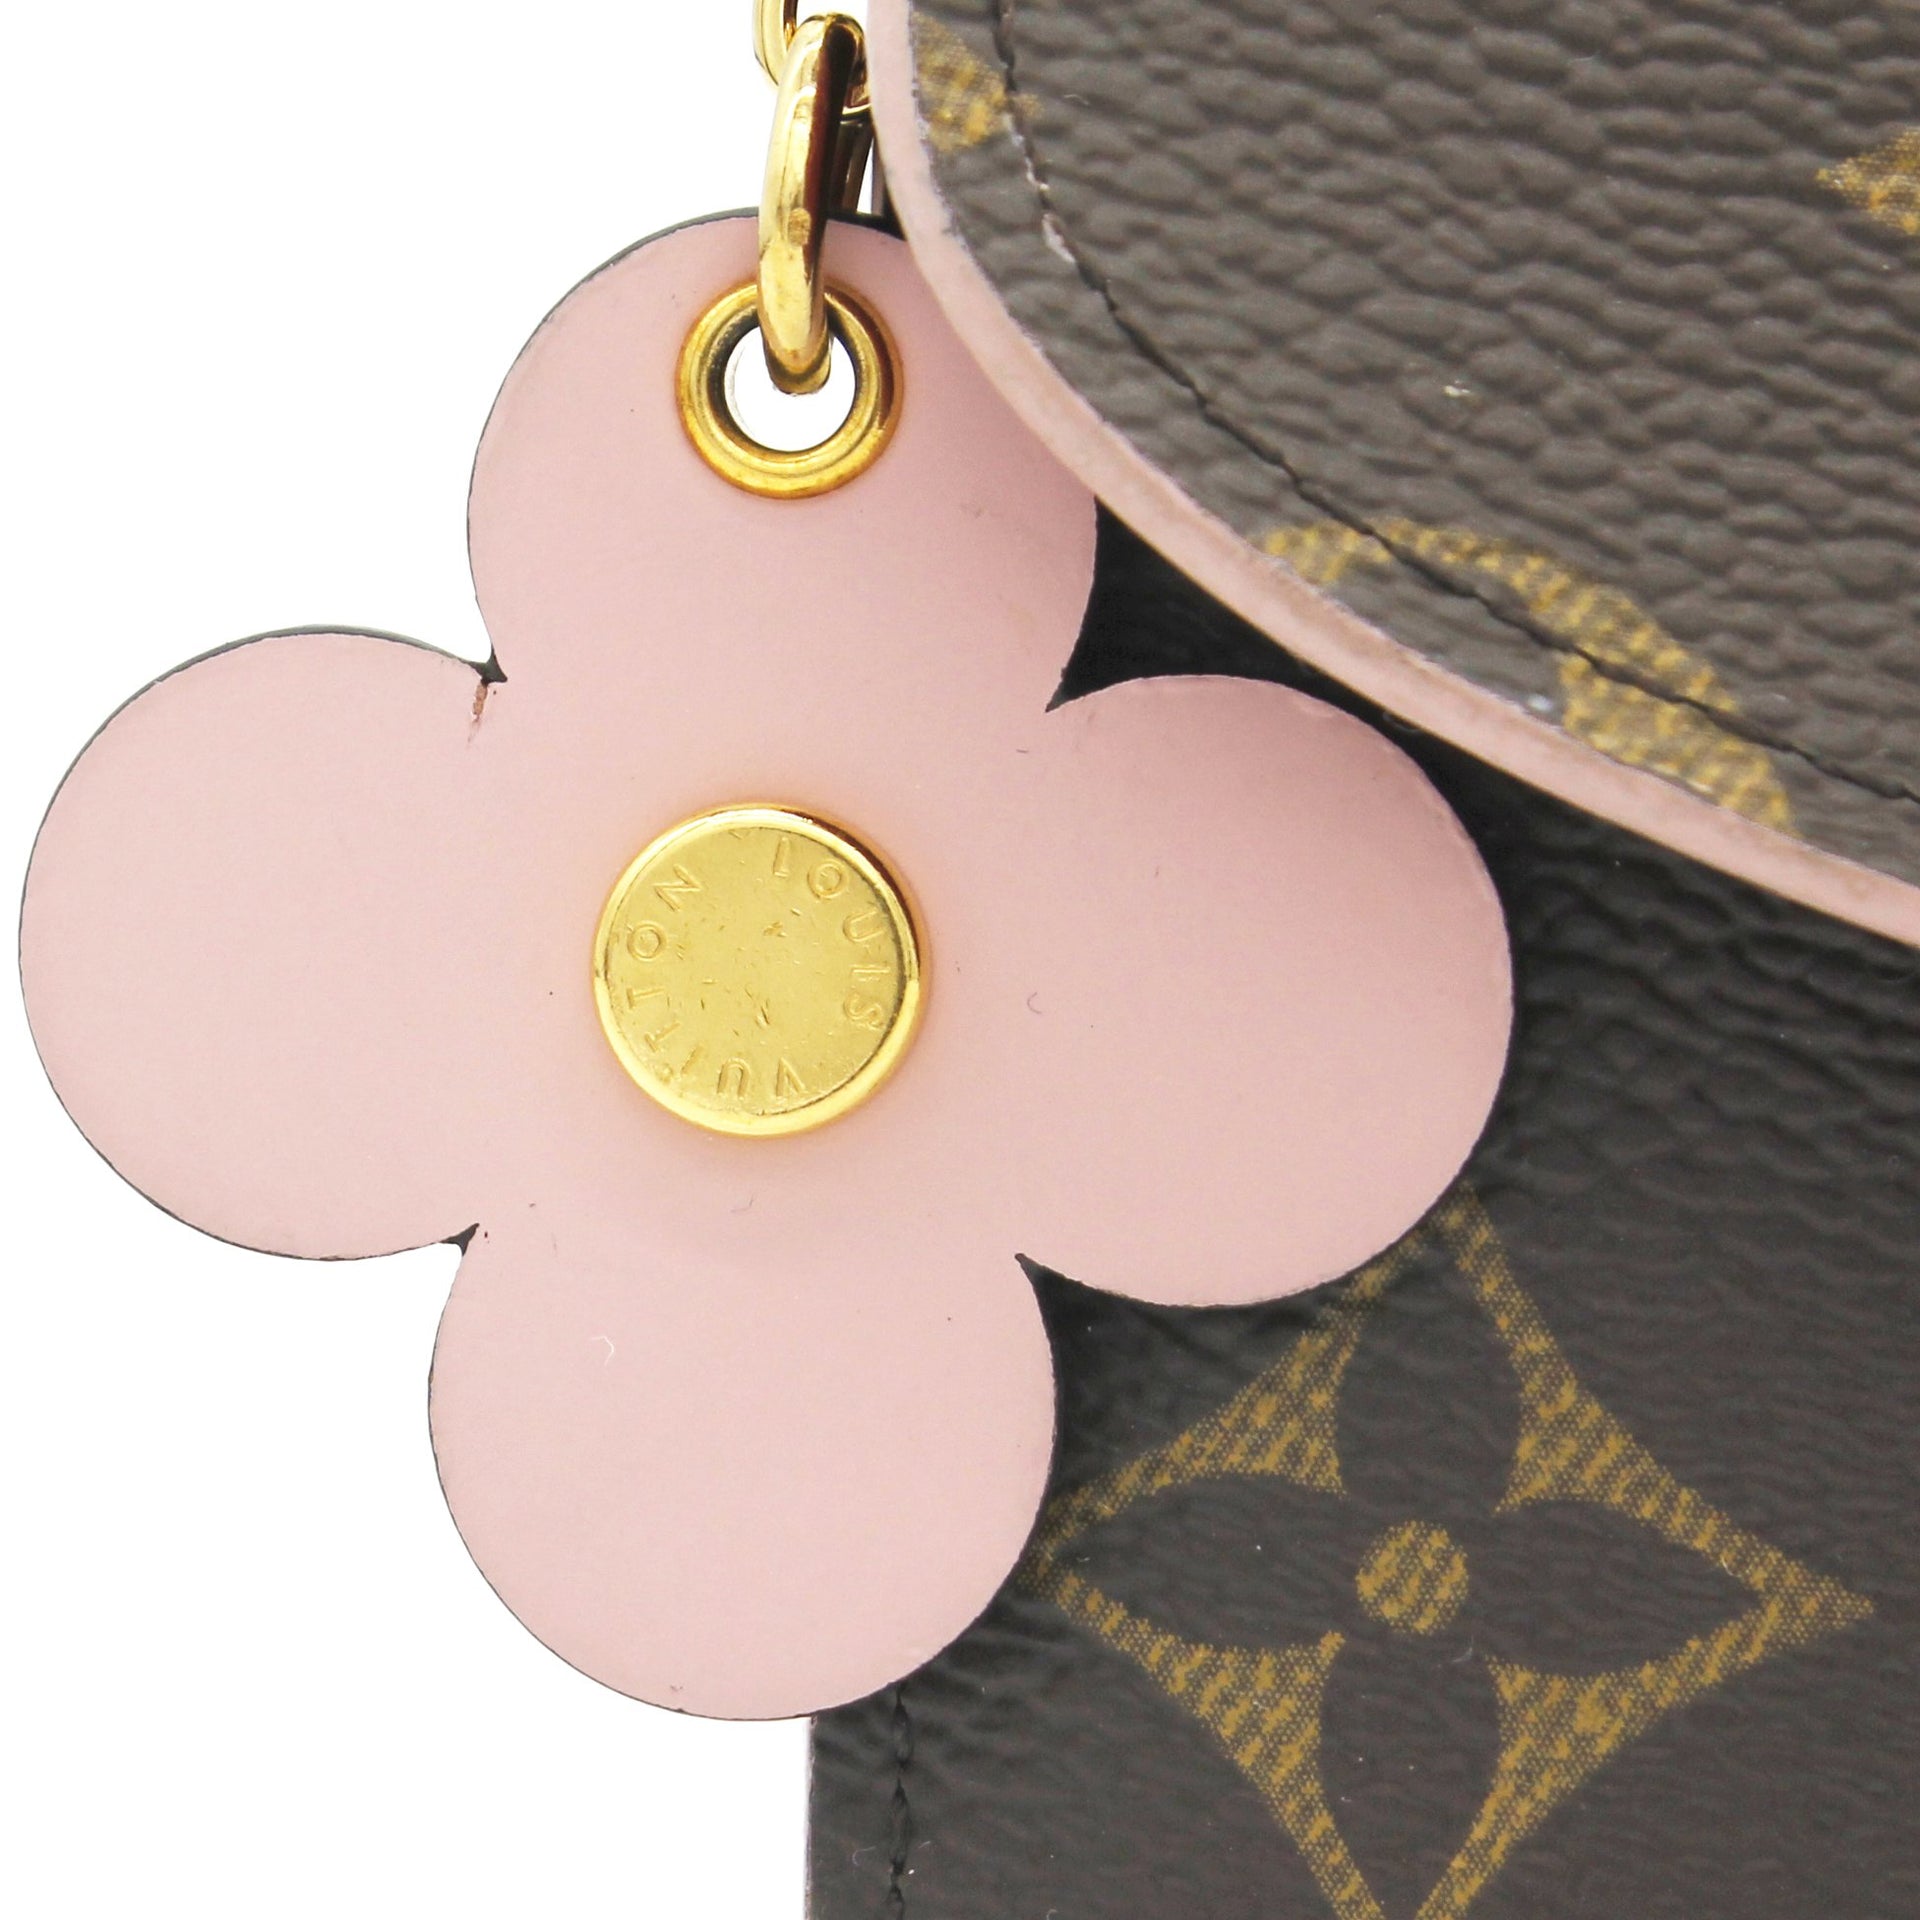 ✨Gently used monogram bloom flower emilie wallet. As is - scuff